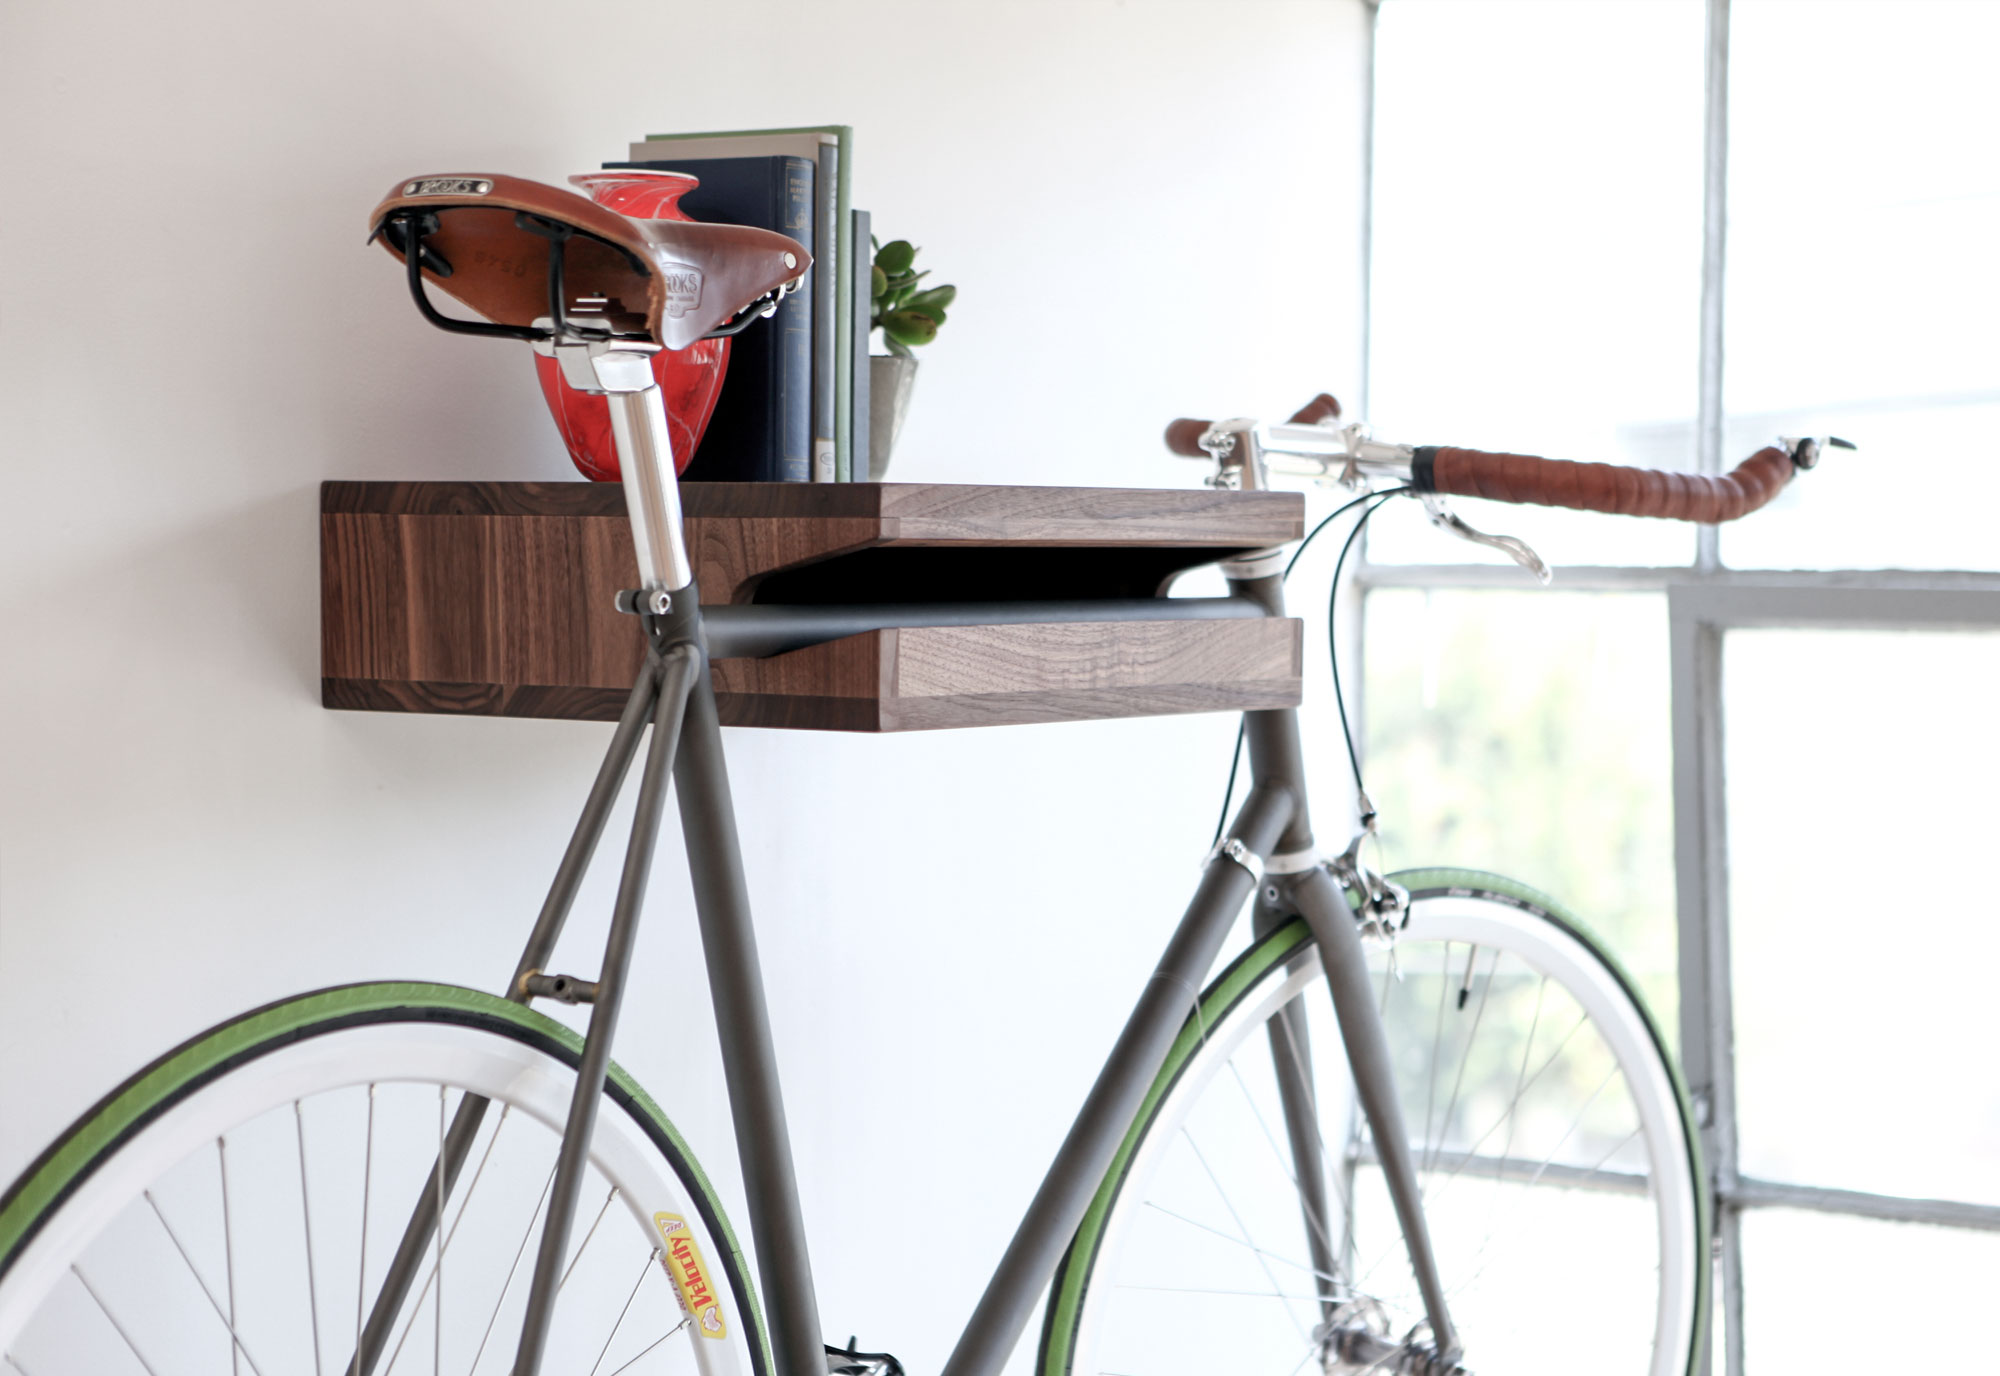 Triangular Cycle Stand, Bike Stands, Street Furniture